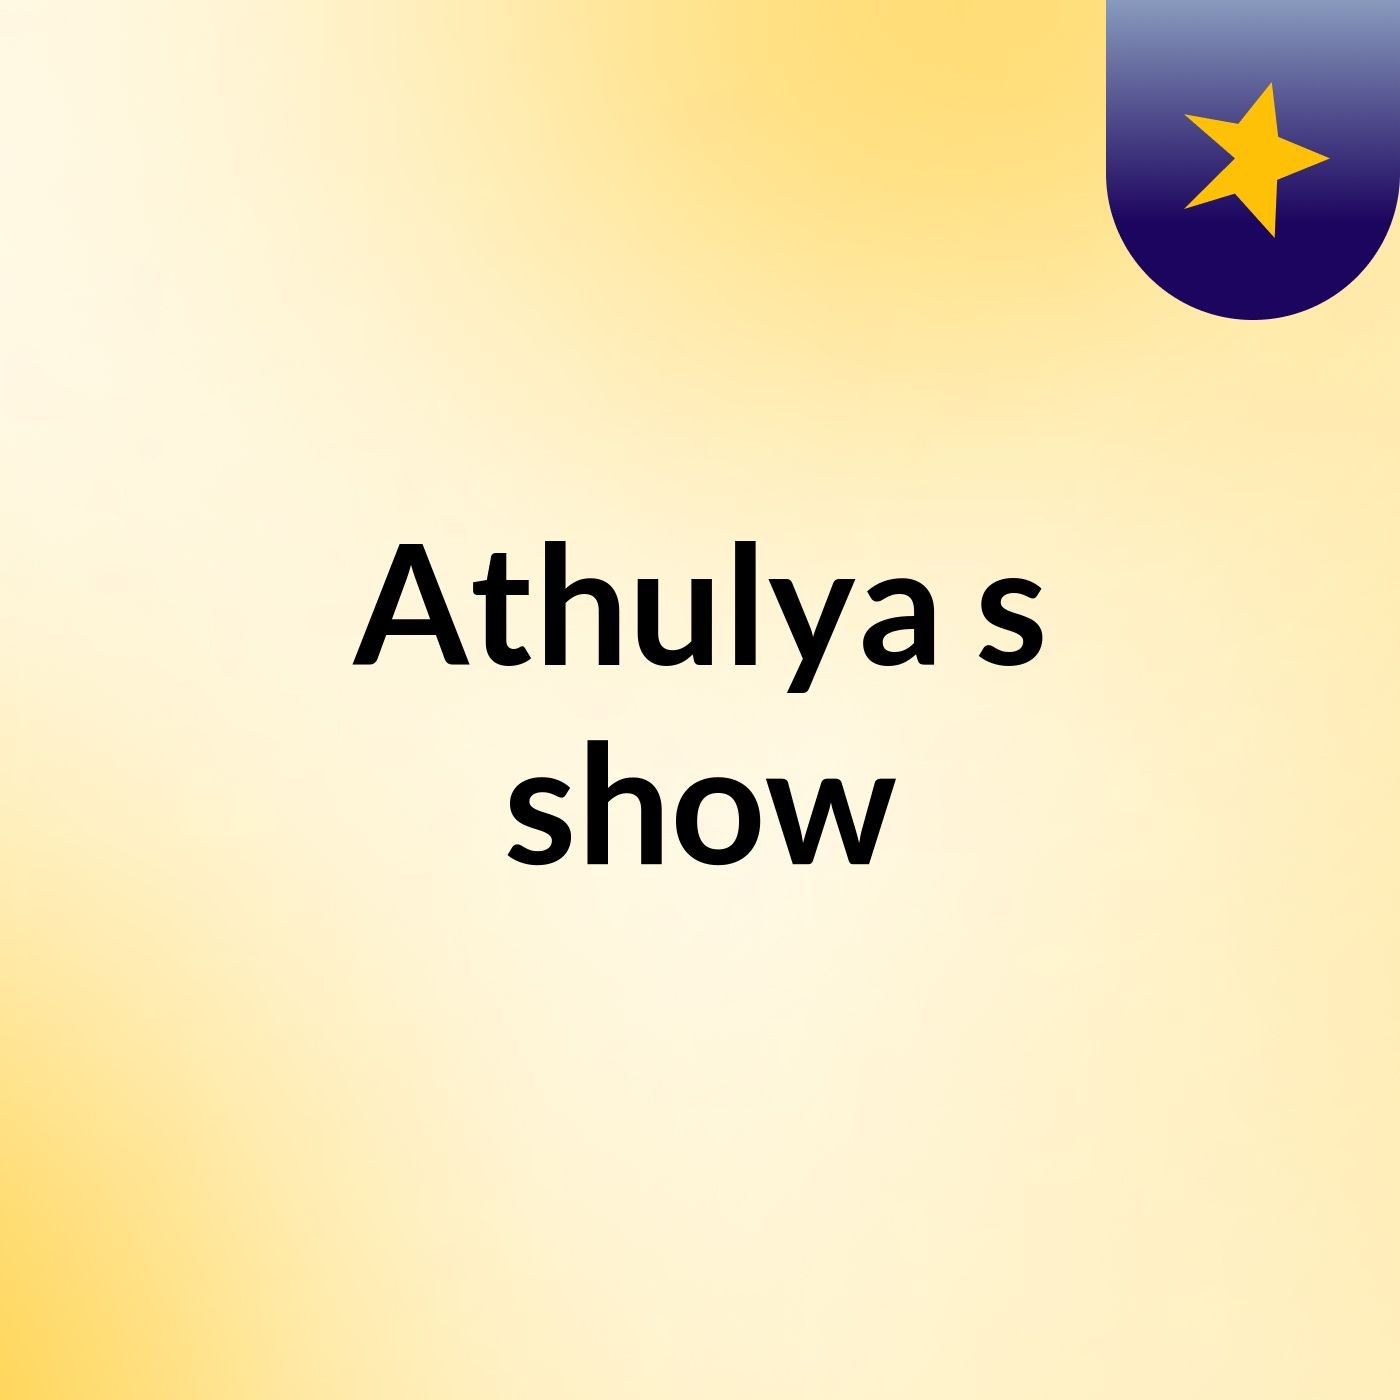 Athulya's show